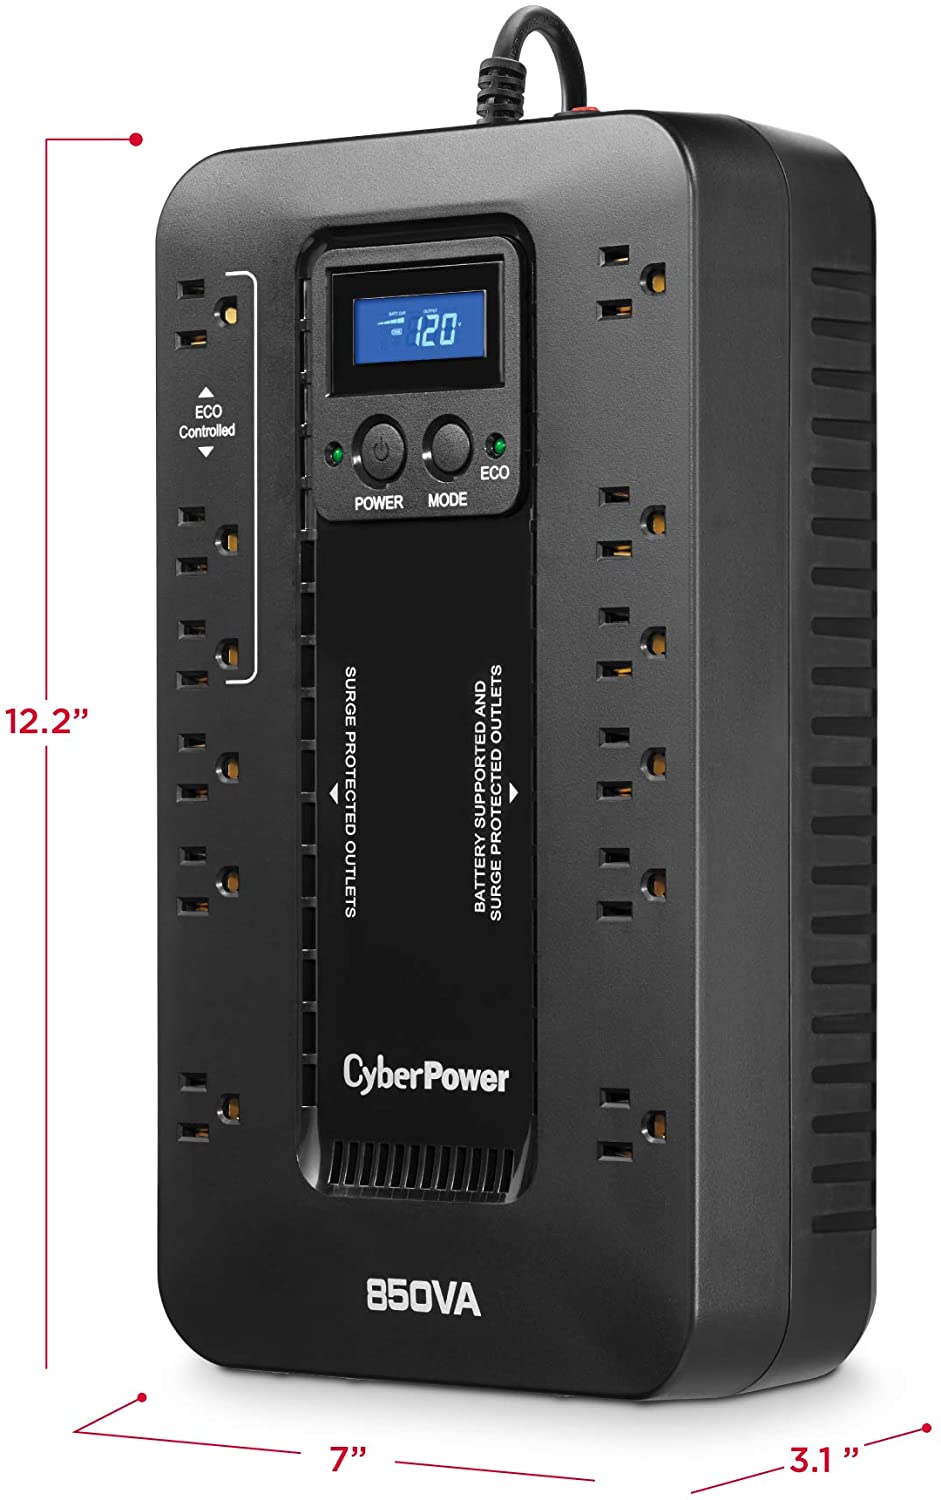 CyberPower EC850LCD Ecologic 850VA/510W Energy Efficient LCD Desktop ECO UPS - 8